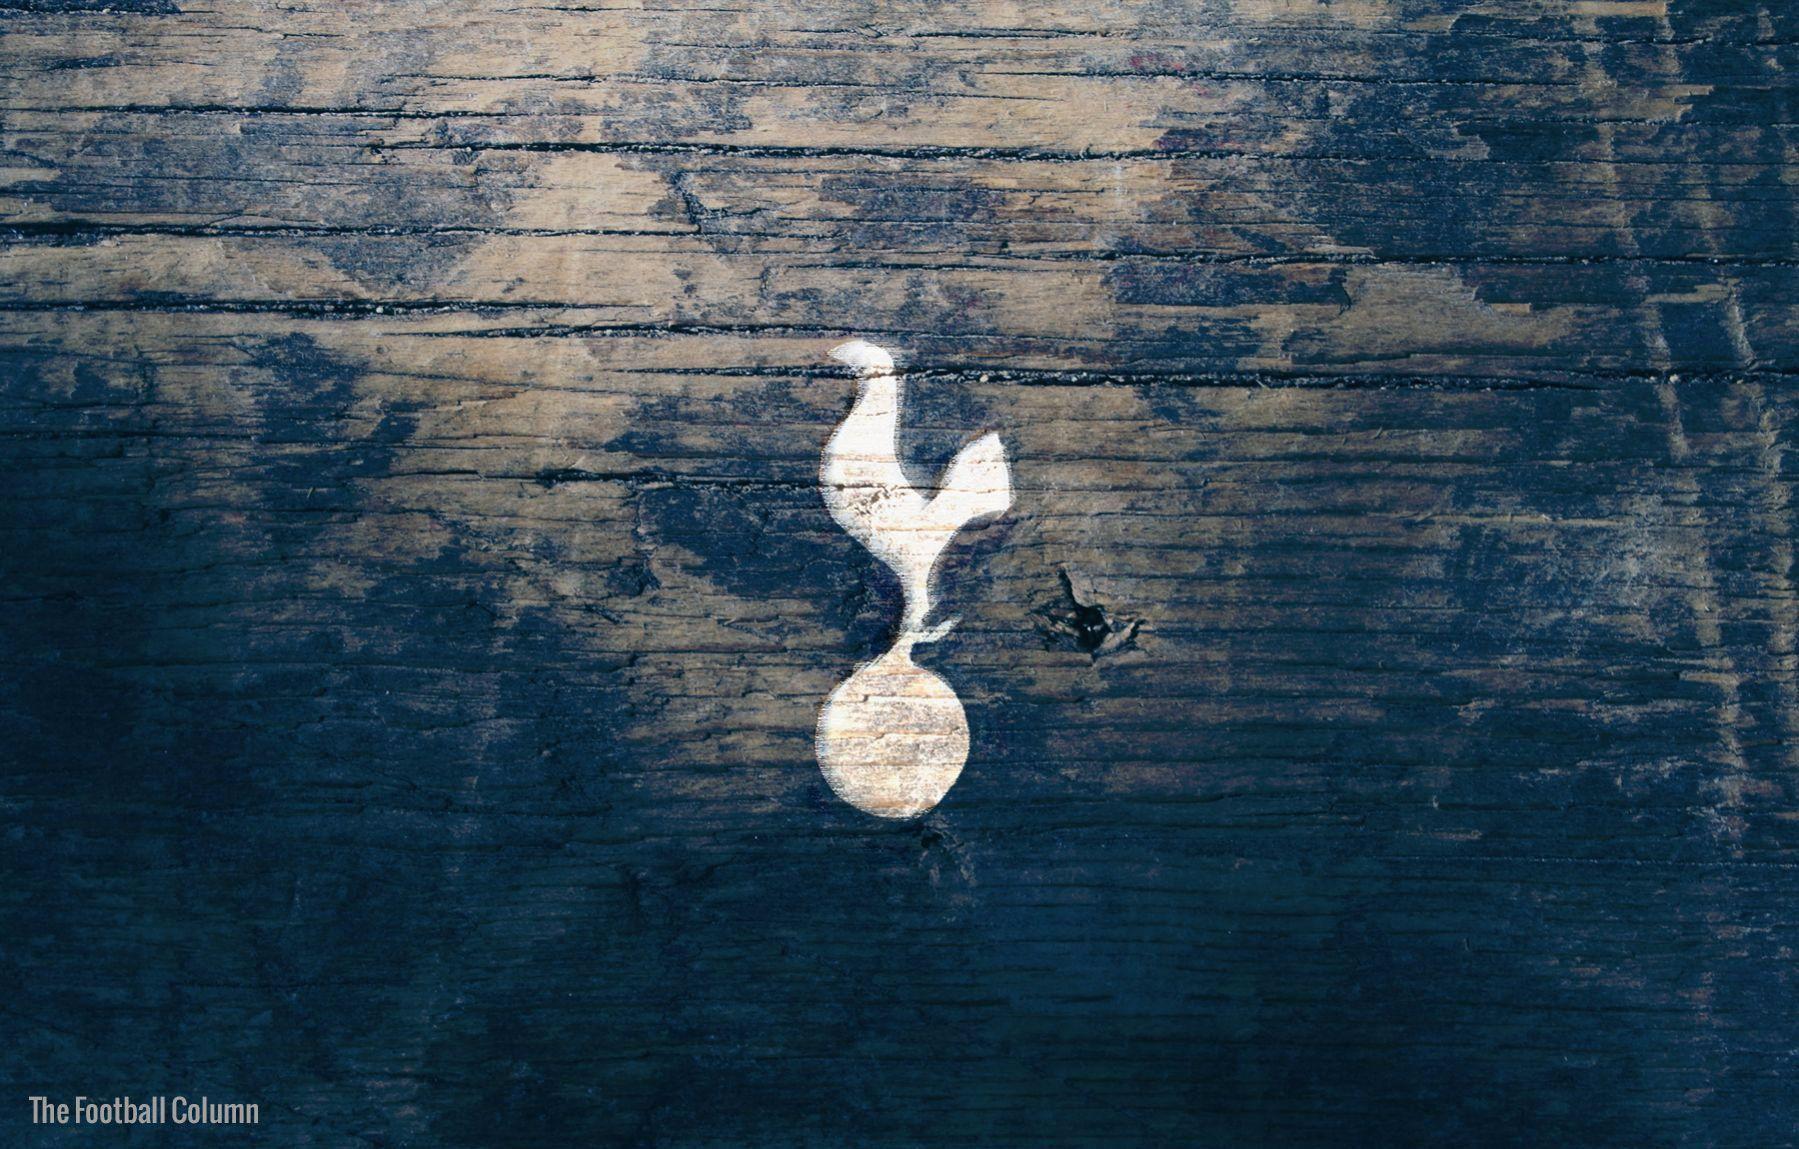 Tottenham Hotspur Desktop Wallpapers